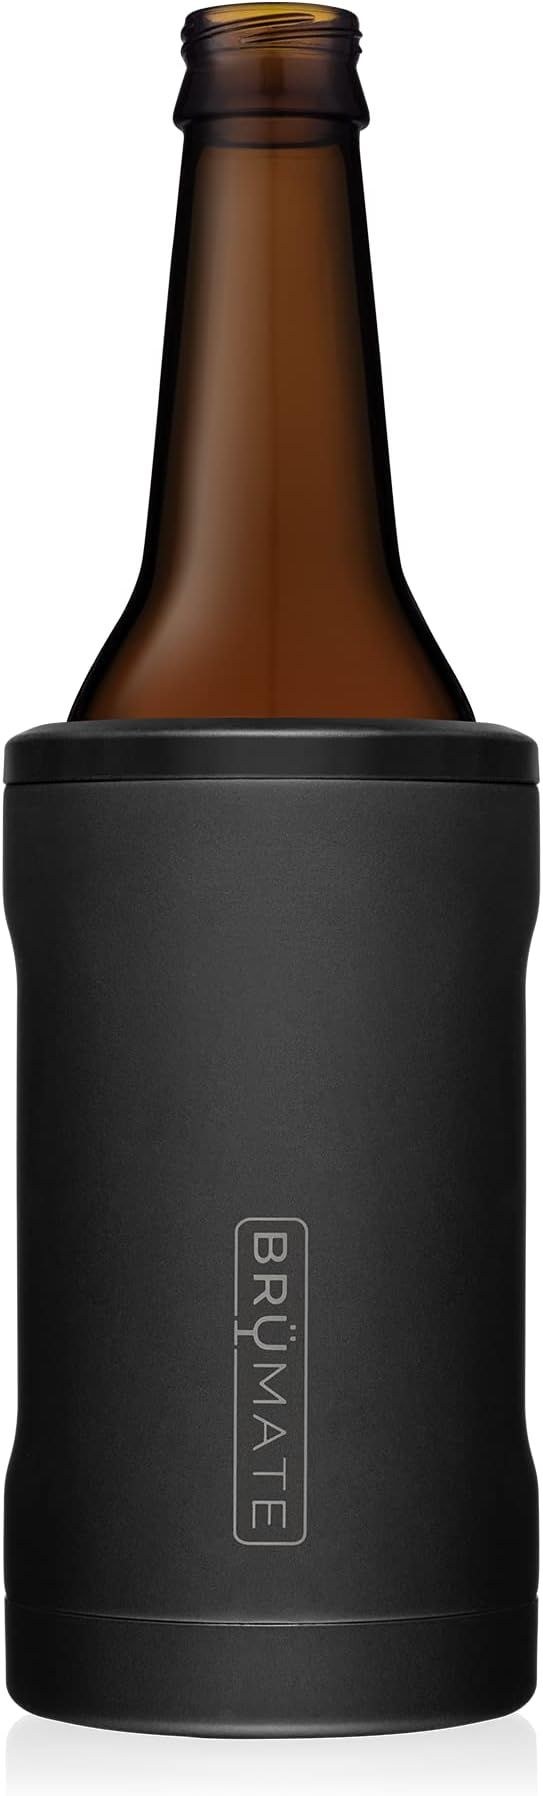 BrüMate Hopsulator BOTT'L - Insulated Beer Bottle Cooler for 12 Oz Bottles - Double-walled Stain... | Amazon (US)